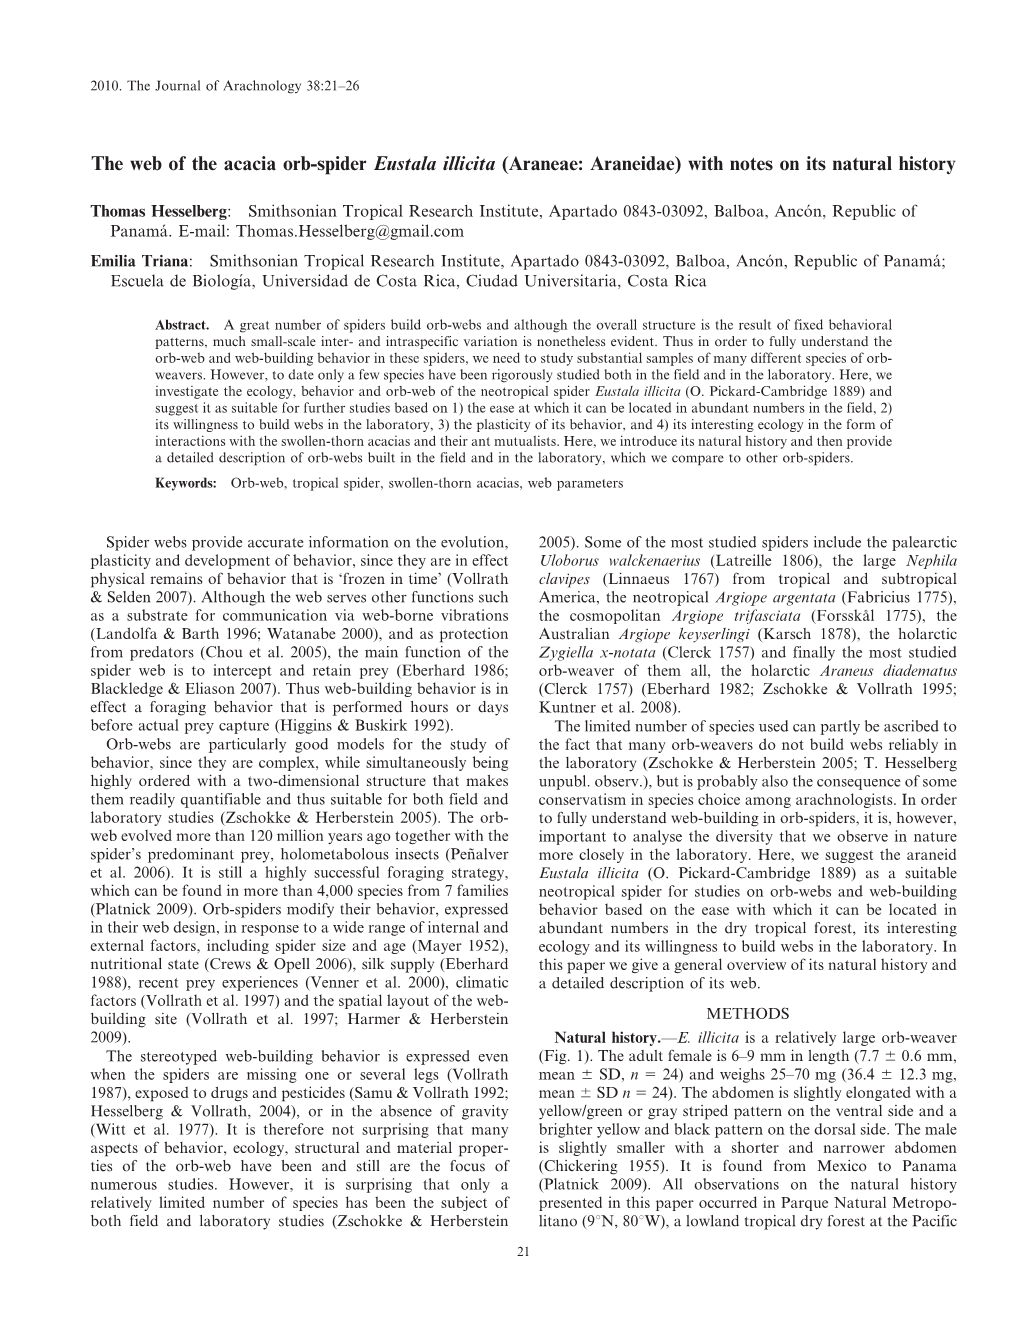 The Web of the Acacia Orb-Spider Eustala Illicita (Araneae: Araneidae) with Notes on Its Natural History